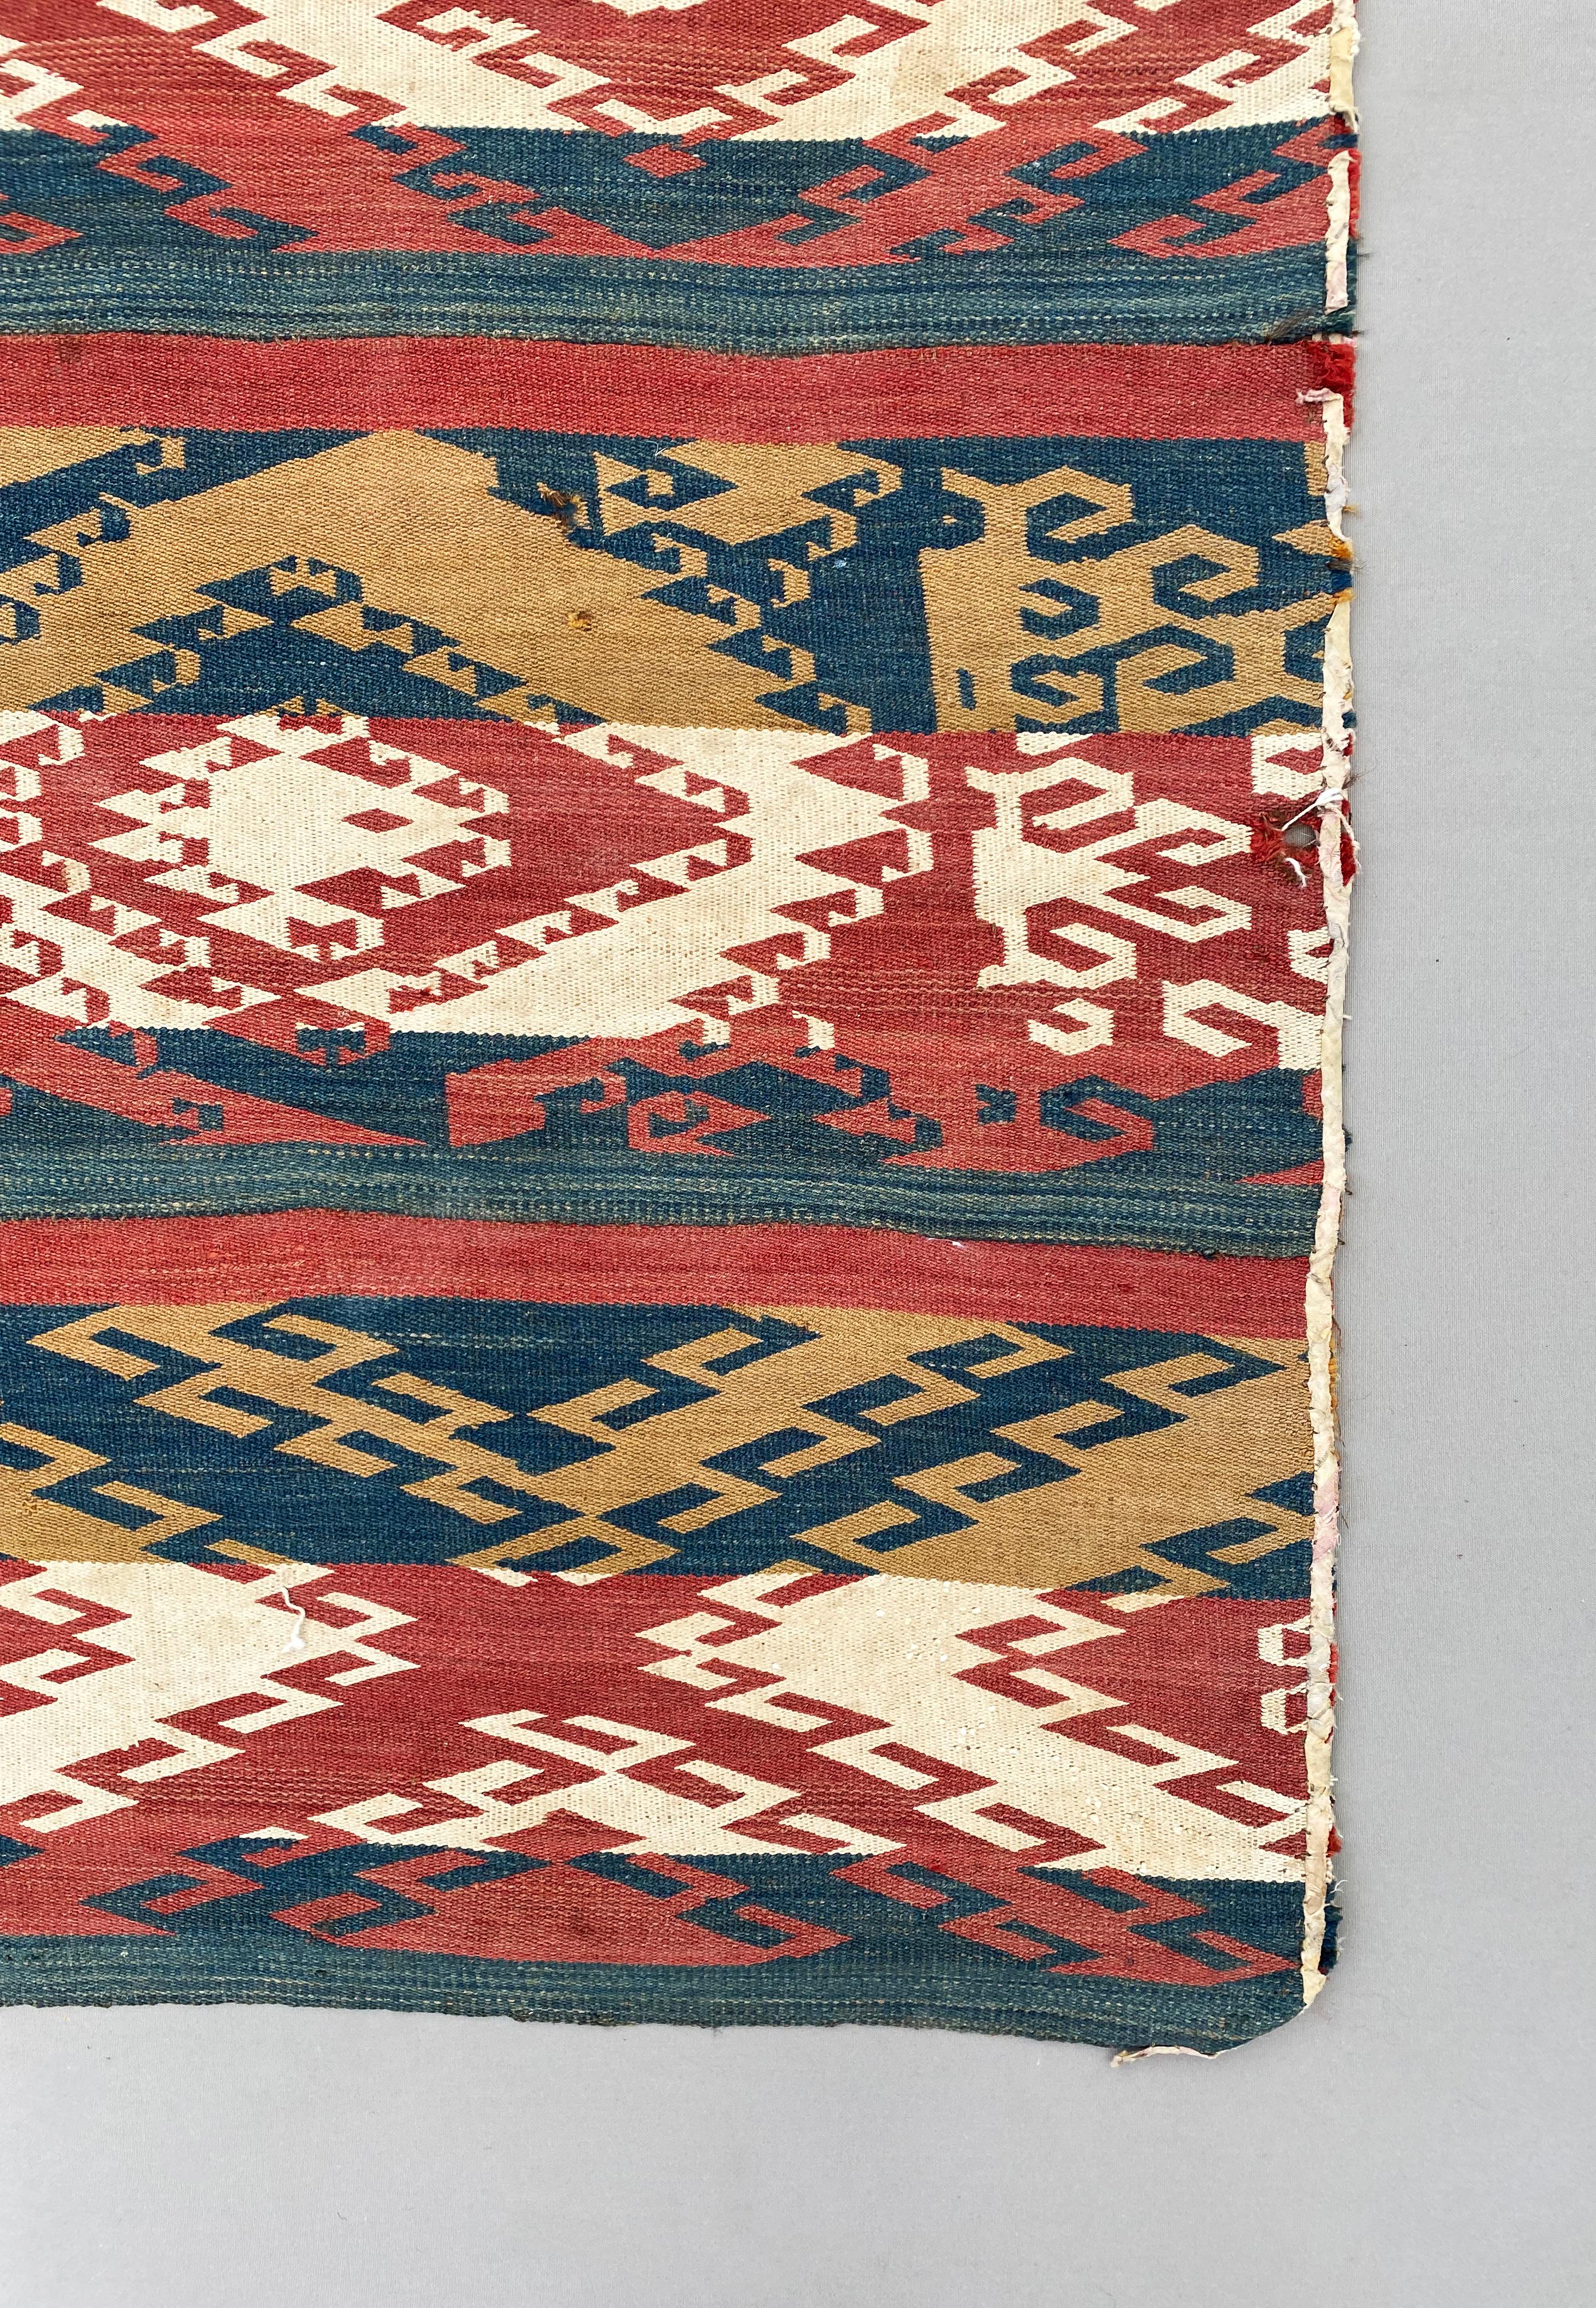 Uzbekistan Ghudjeri Tribal Kilim Rug from Wool, Room Size, Early 20th Century In Good Condition For Sale In Jimbaran, Bali